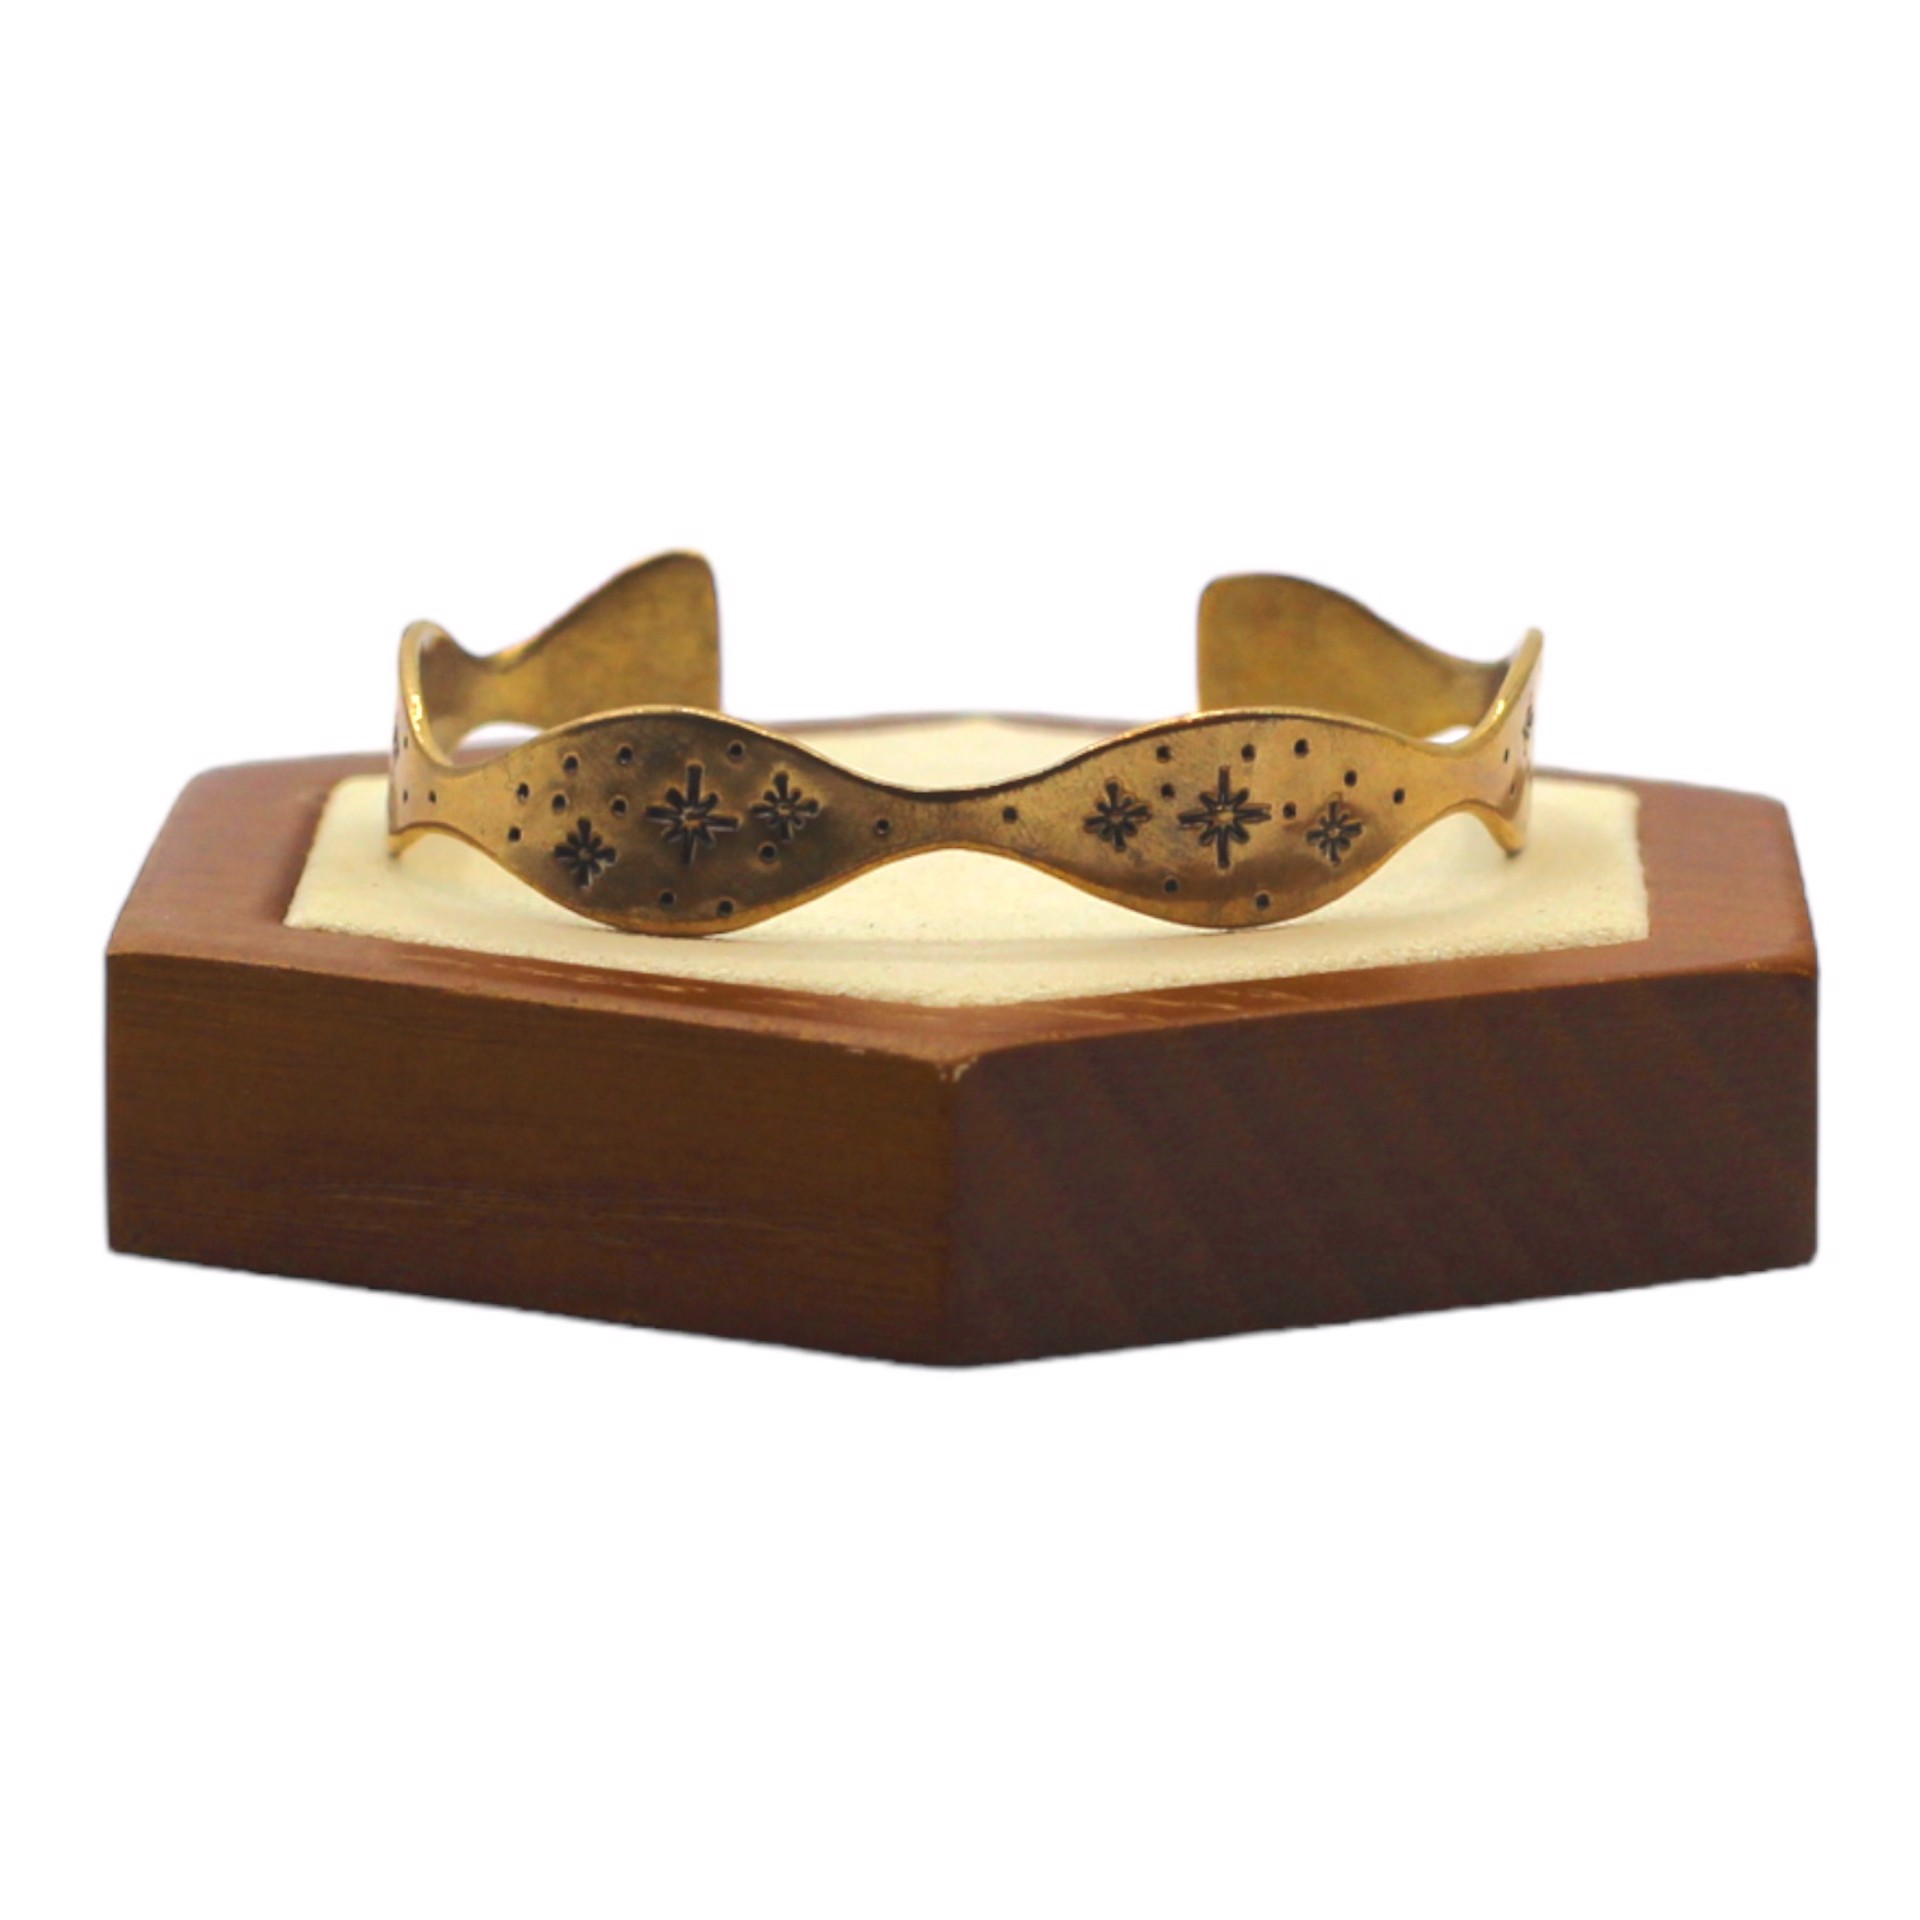 Starry Brass Cuff Bracelet by Sadee Crum